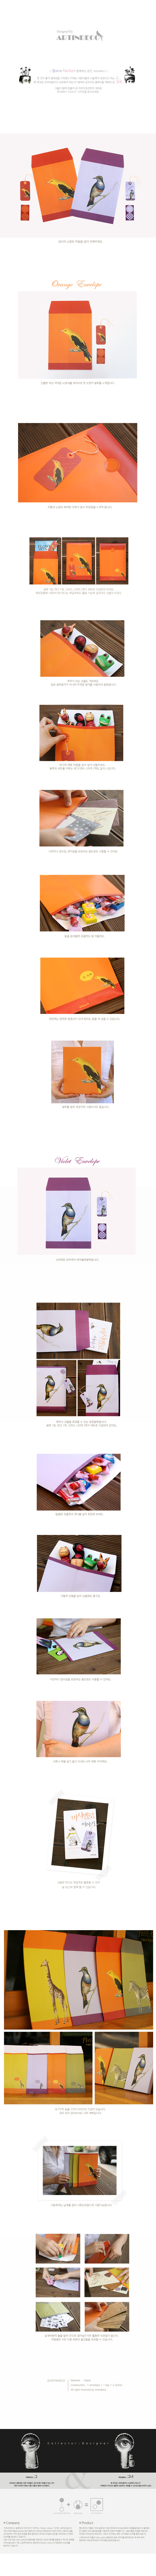 Bird Envelope set (선물봉투+태그) 1,200원 - 아트인데코 디자인문구, 카드/편지/봉투, 편지봉투, 가로봉투 바보사랑 Bird Envelope set (선물봉투+태그) 1,200원 - 아트인데코 디자인문구, 카드/편지/봉투, 편지봉투, 가로봉투 바보사랑